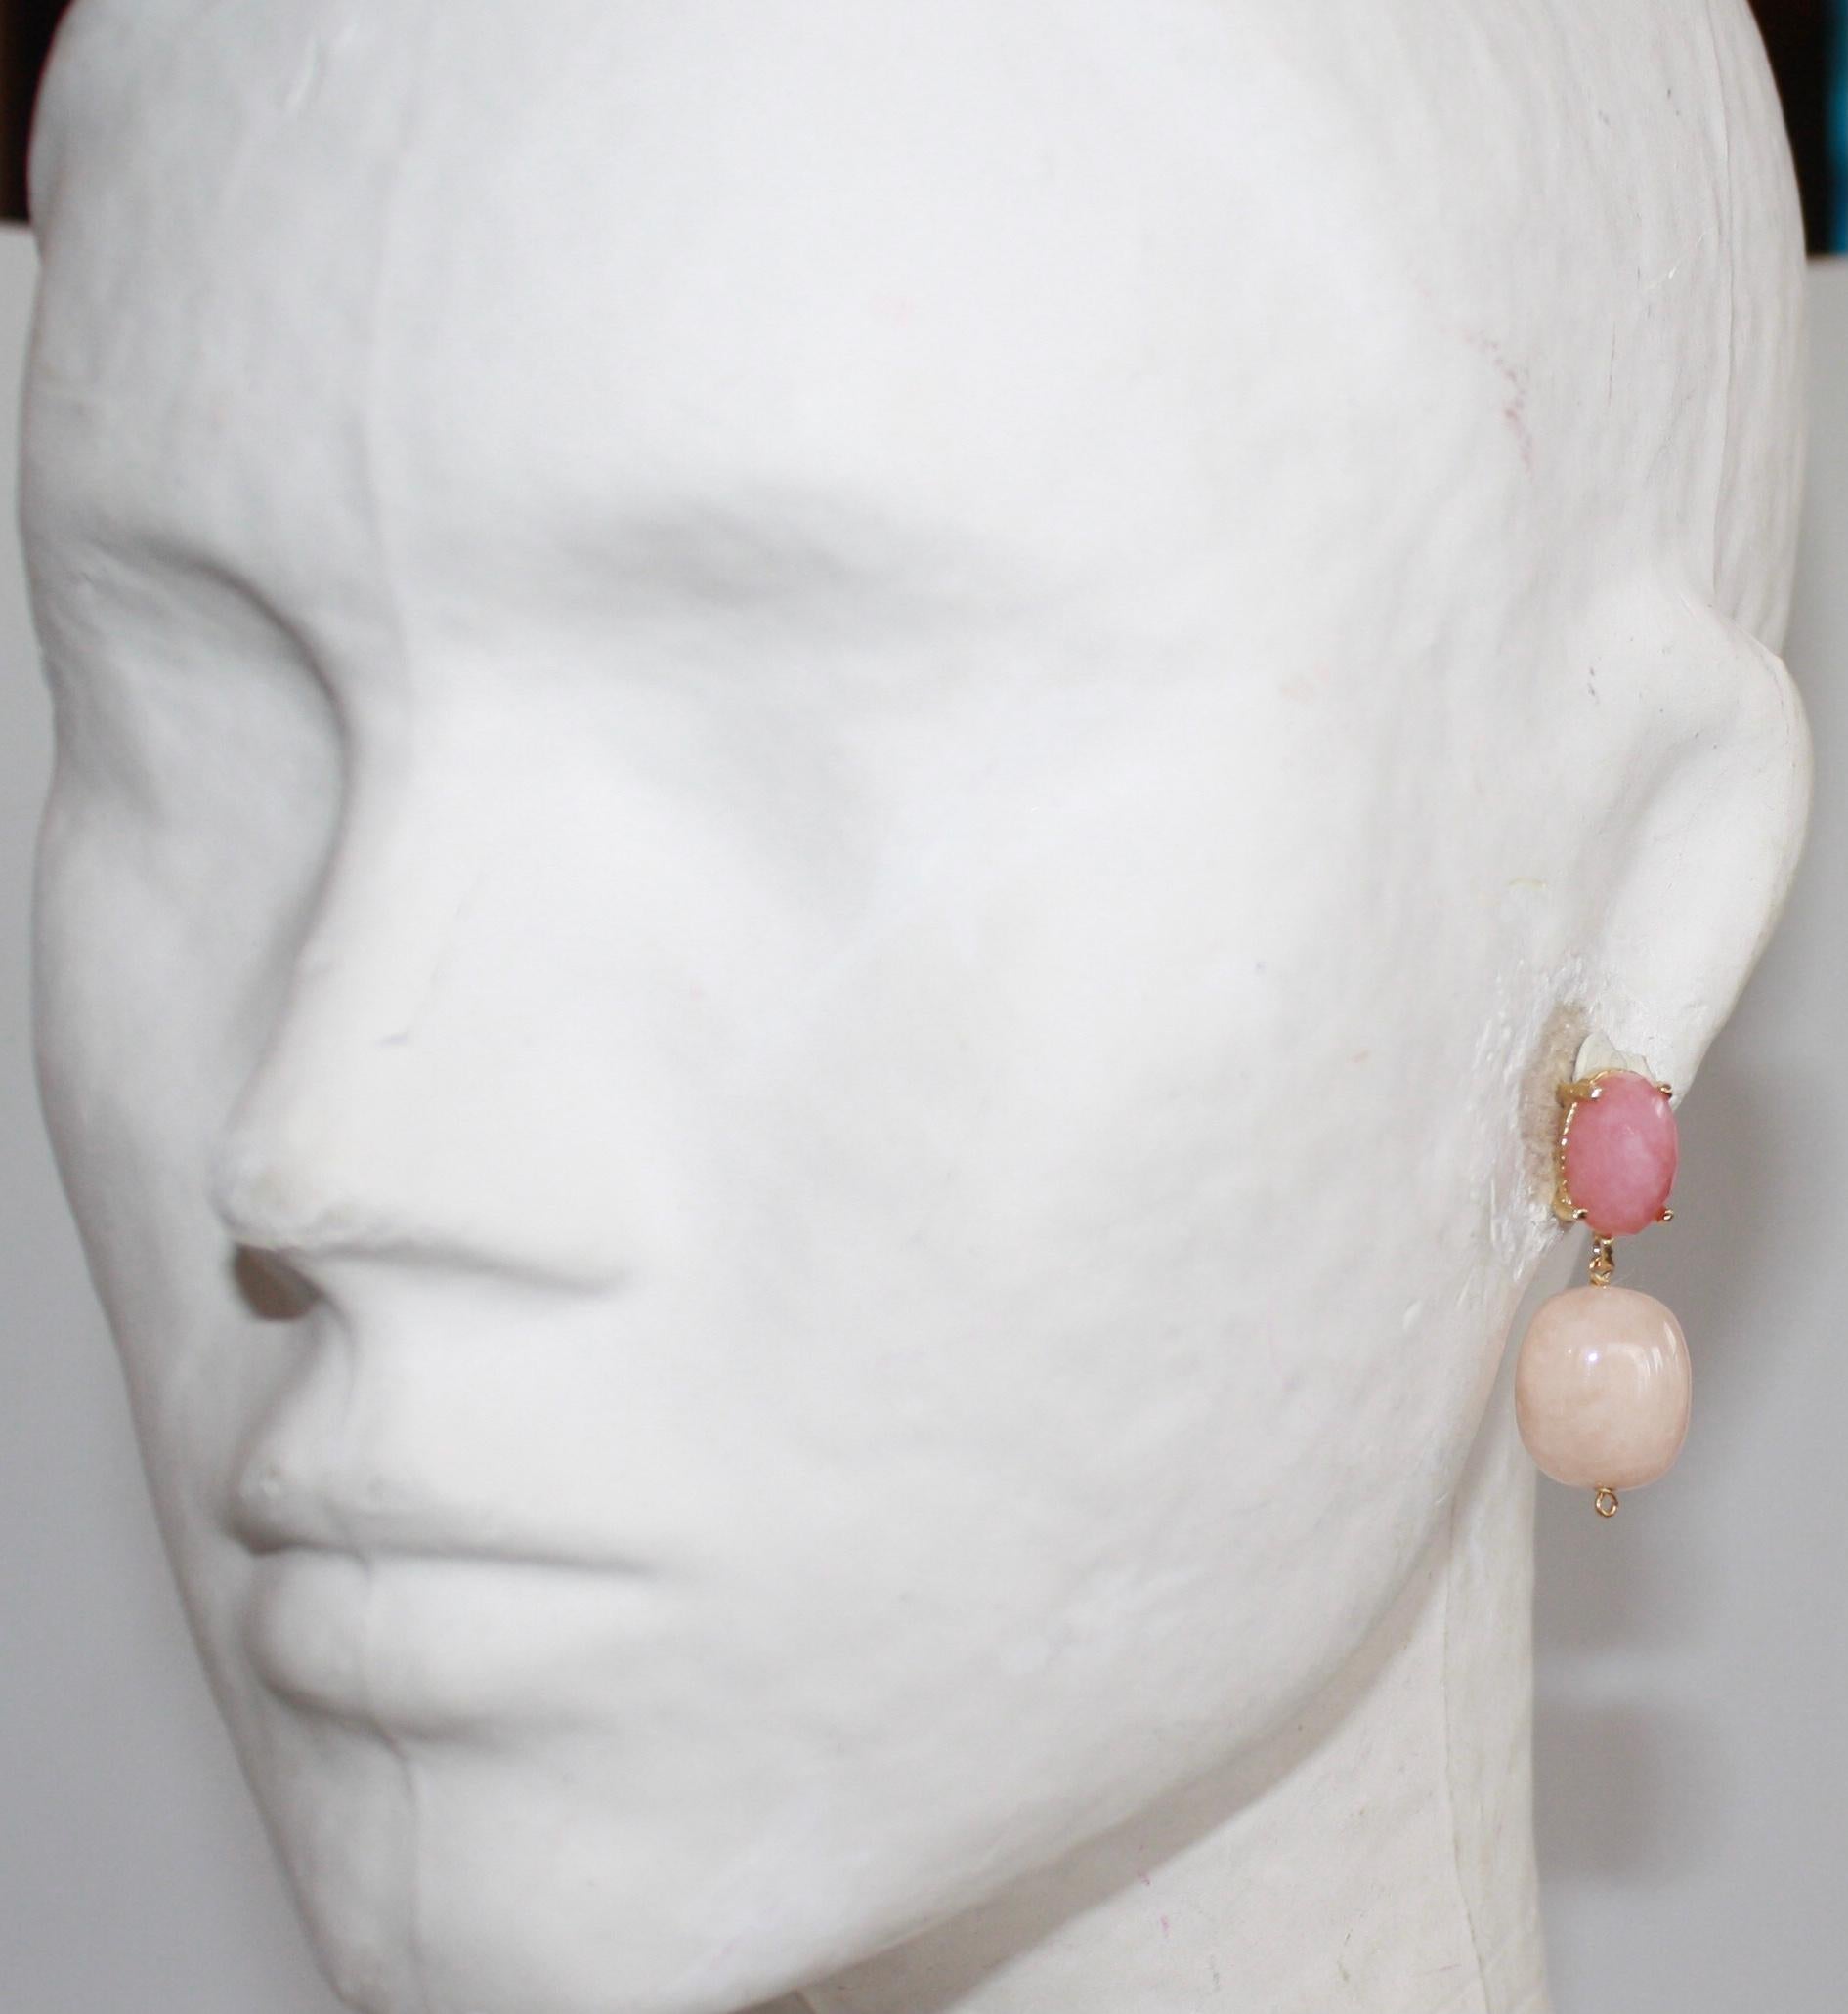 Set on vermeil, rose quartz stone and beveled cabochons dangles